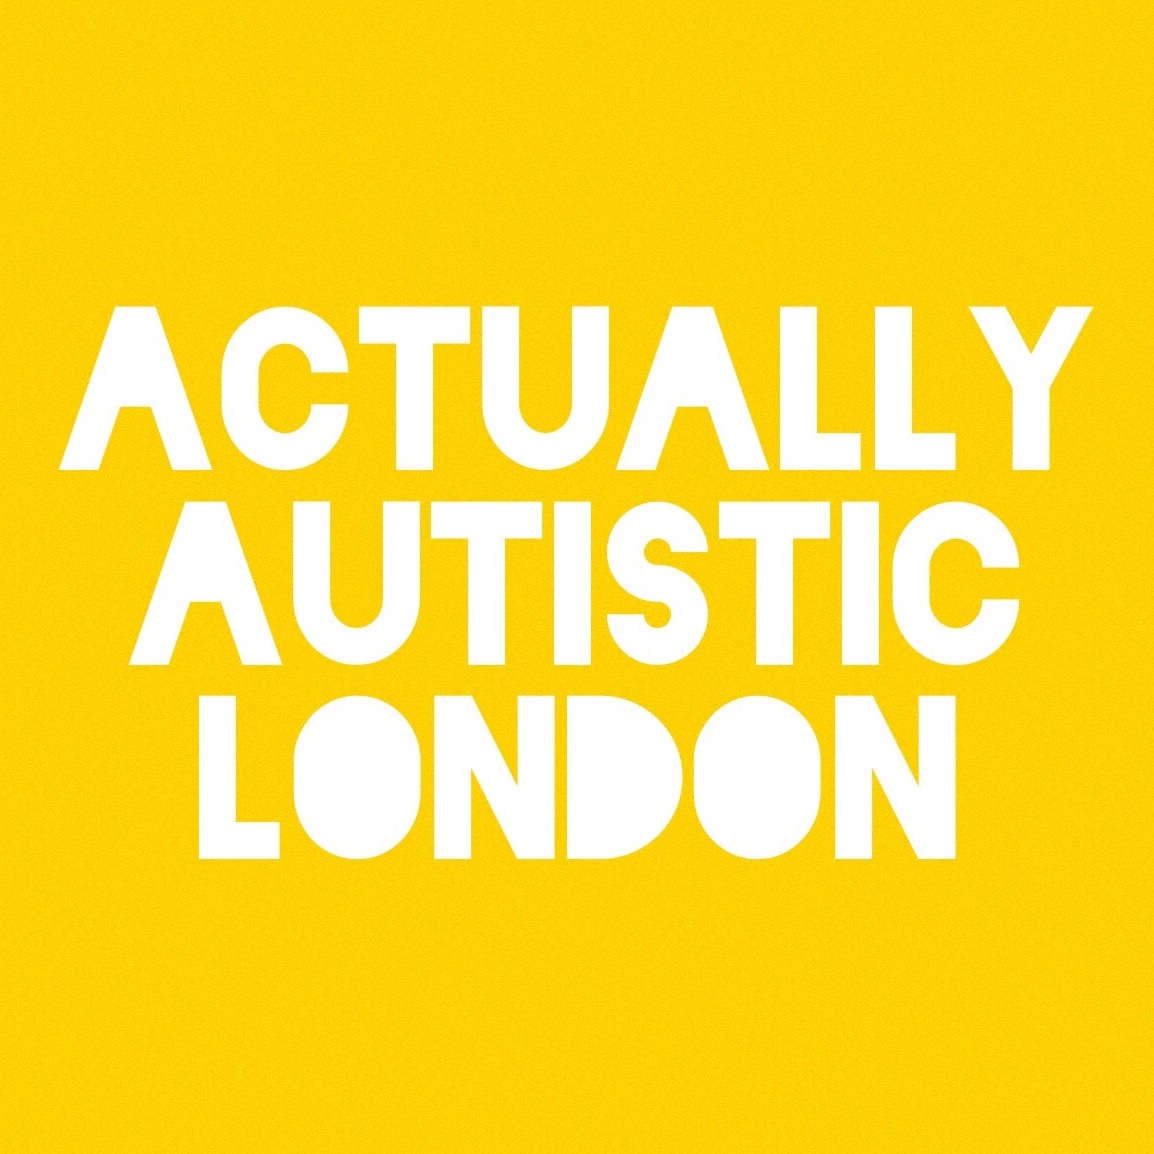 Actually Autistic London